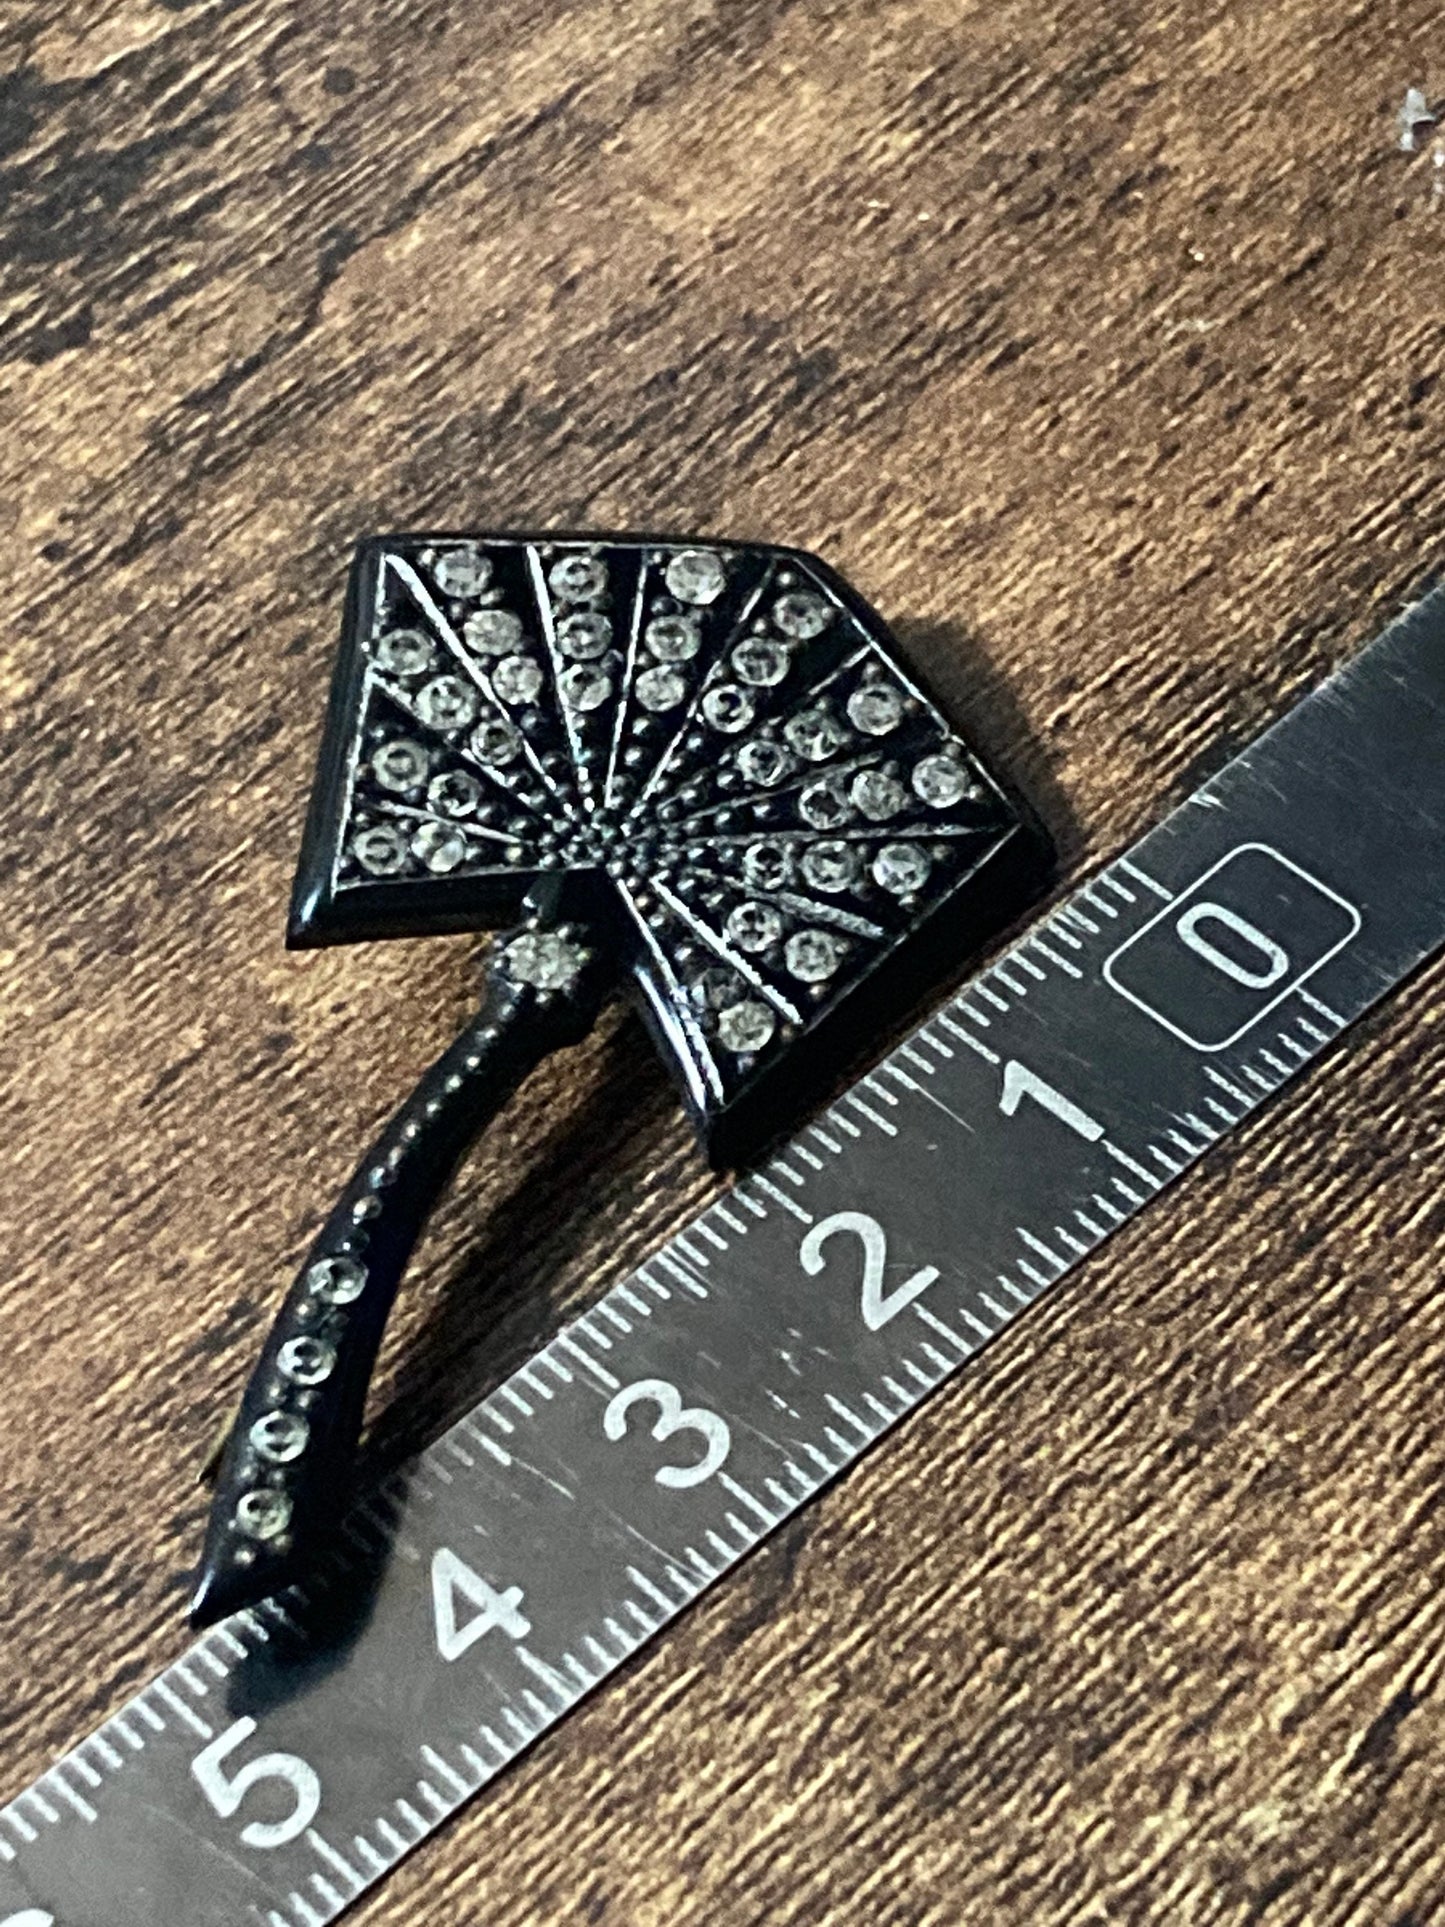 True Art Deco flash pin diamante paste rhinestone set black bakelite hat hairpin